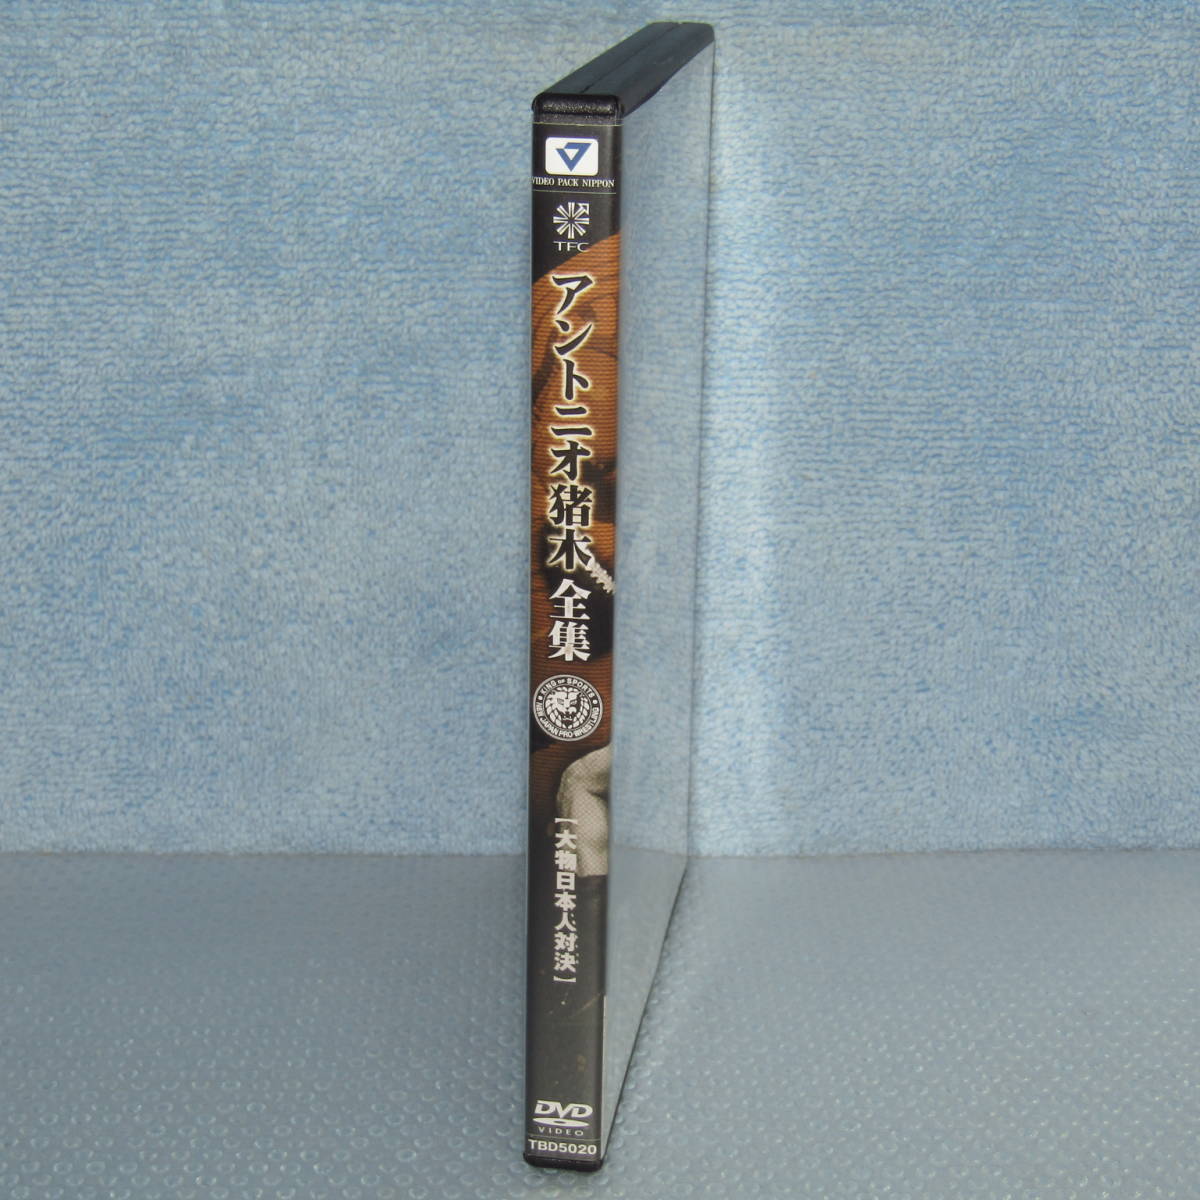 DVD「アントニオ猪木全集 Ⅲ 3 大物日本人対決」 | www.qmsbrasil.com.br